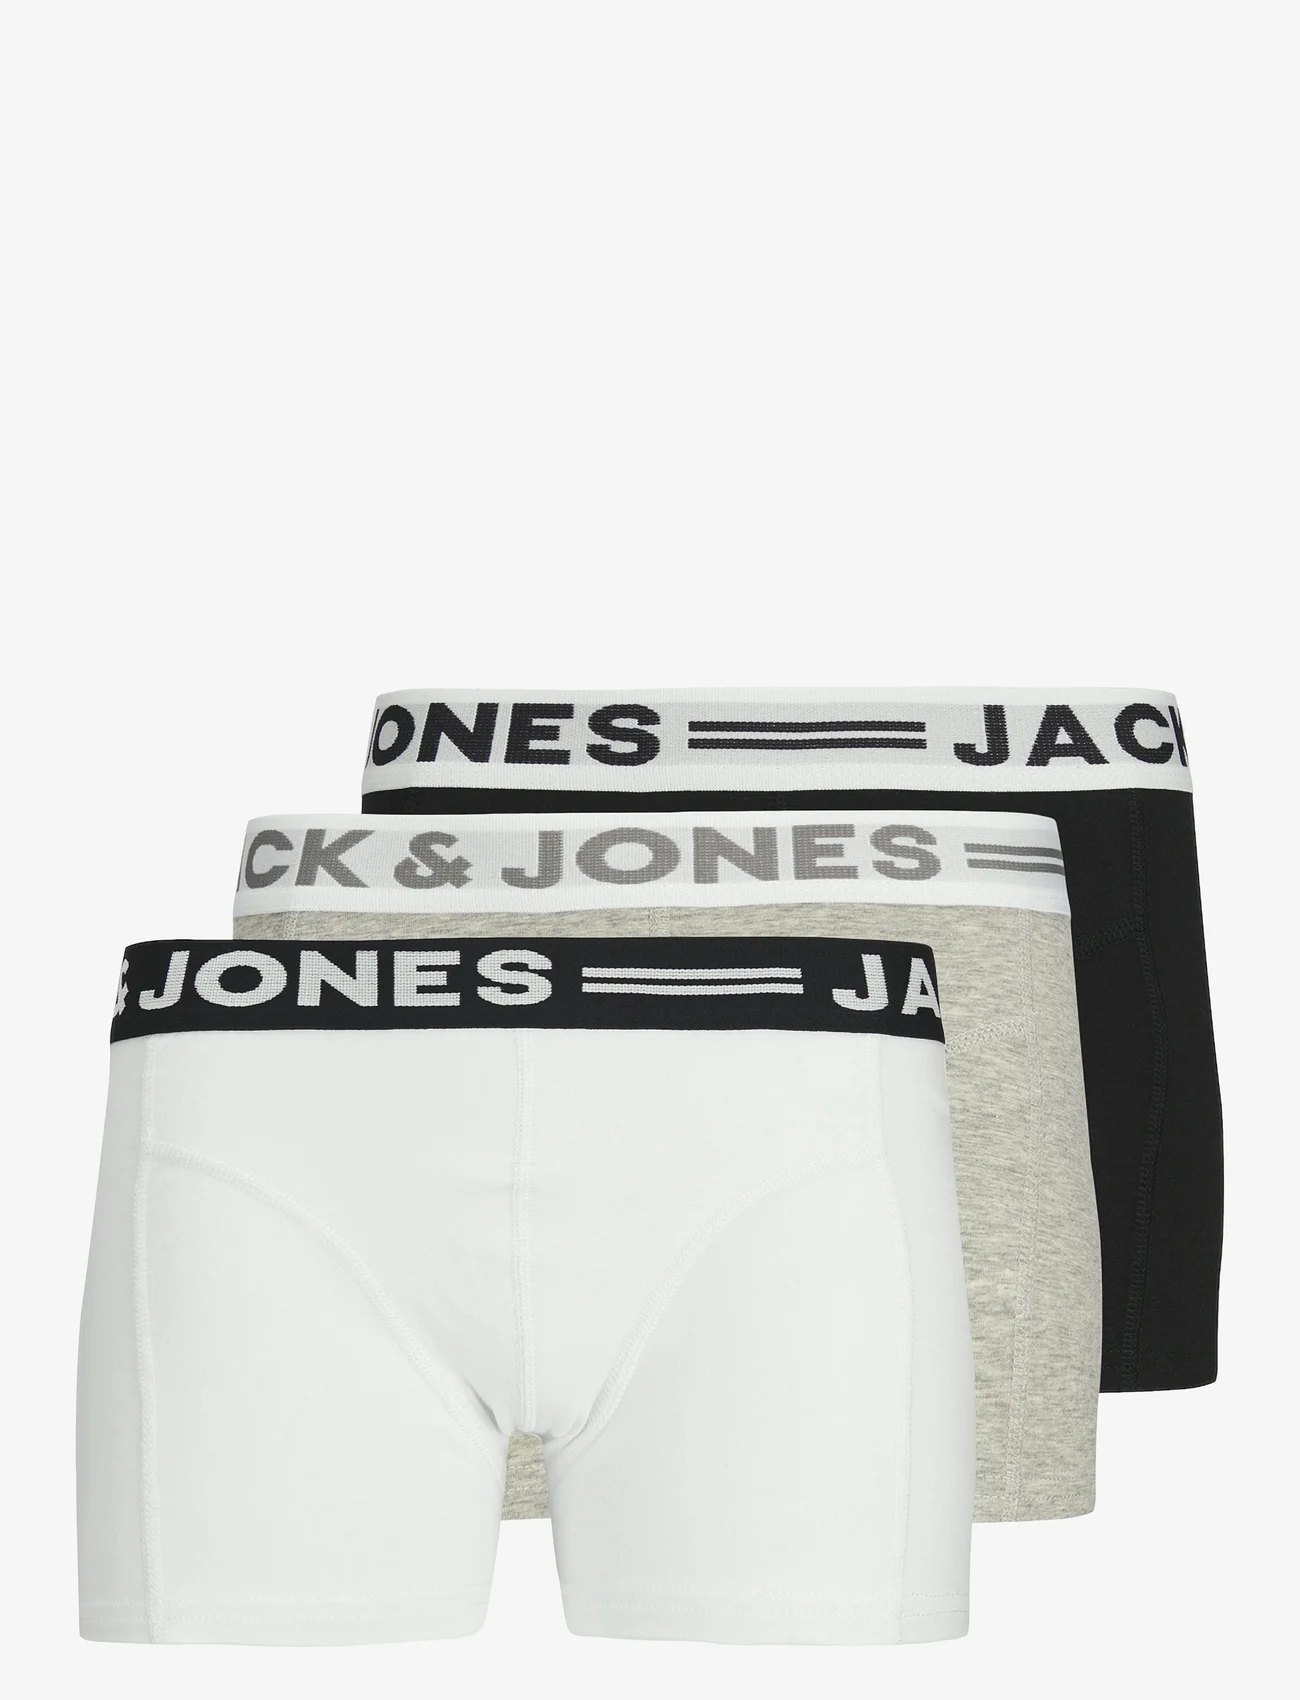 Jack & Jones - SENSE TRUNKS 3-PACK NOOS JNR - underpants - light grey melange - 0